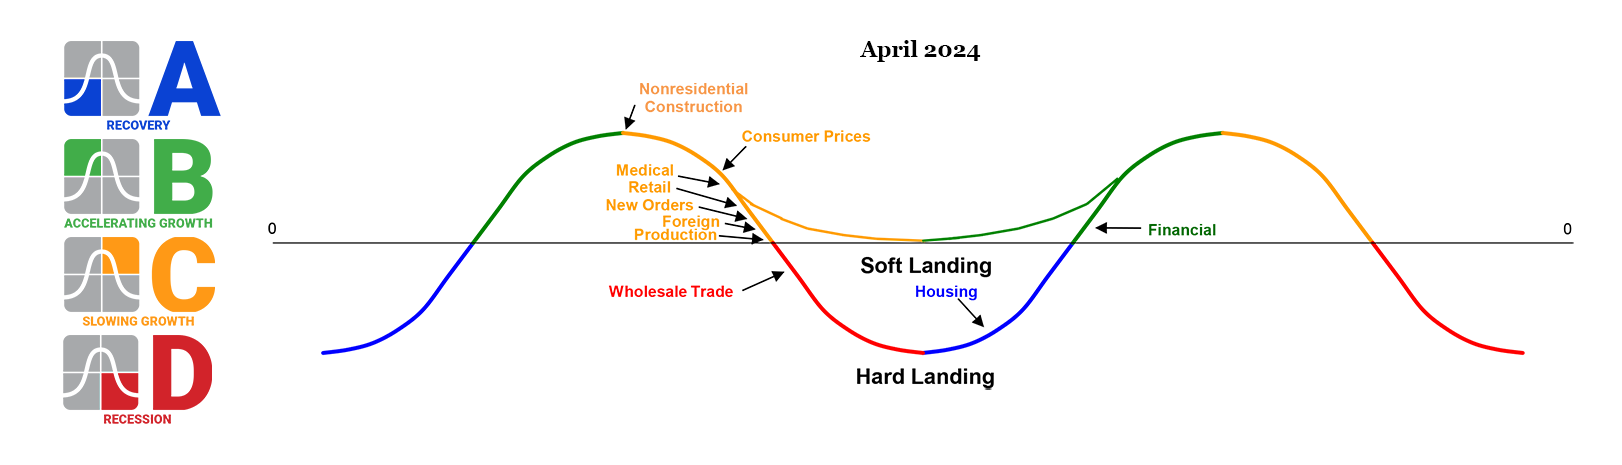 April 2024 Trends 10